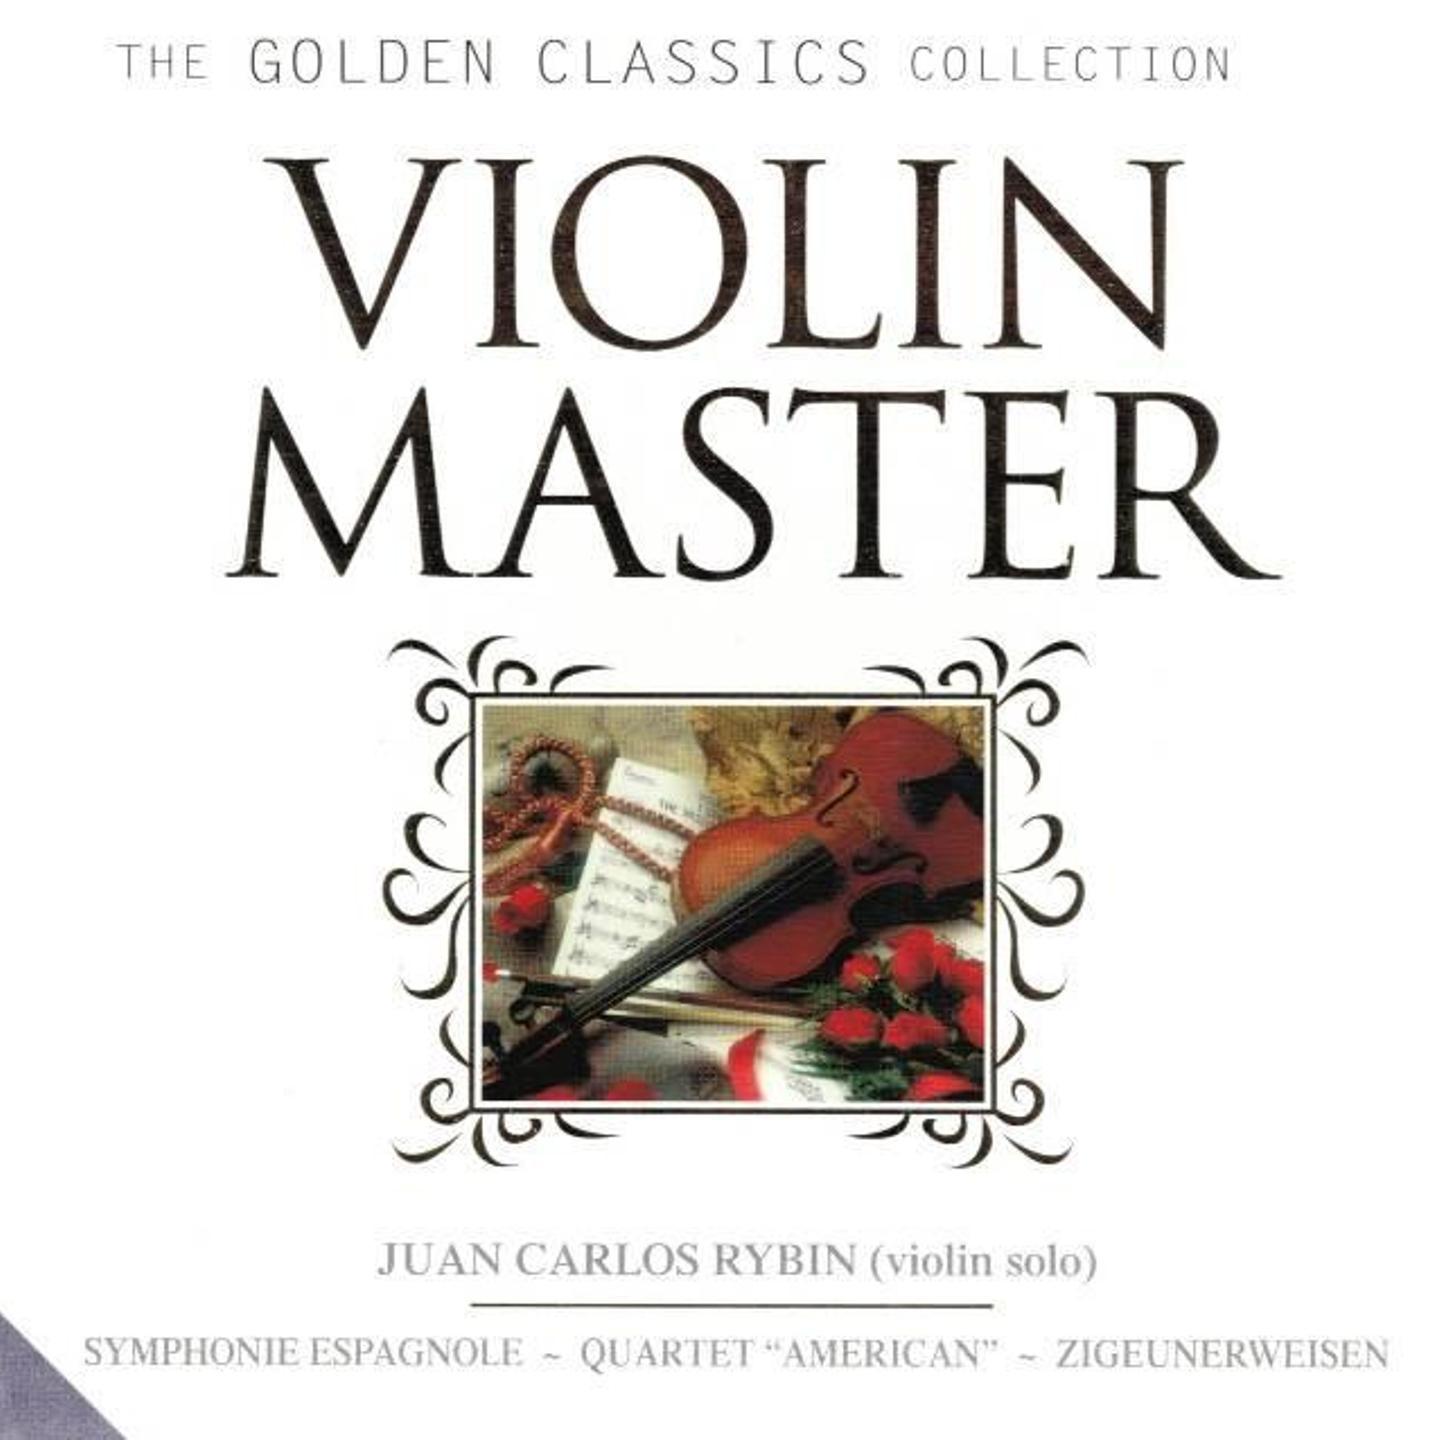 Violin Concerto in E Minor, Op. 64. Allegro molto vivace